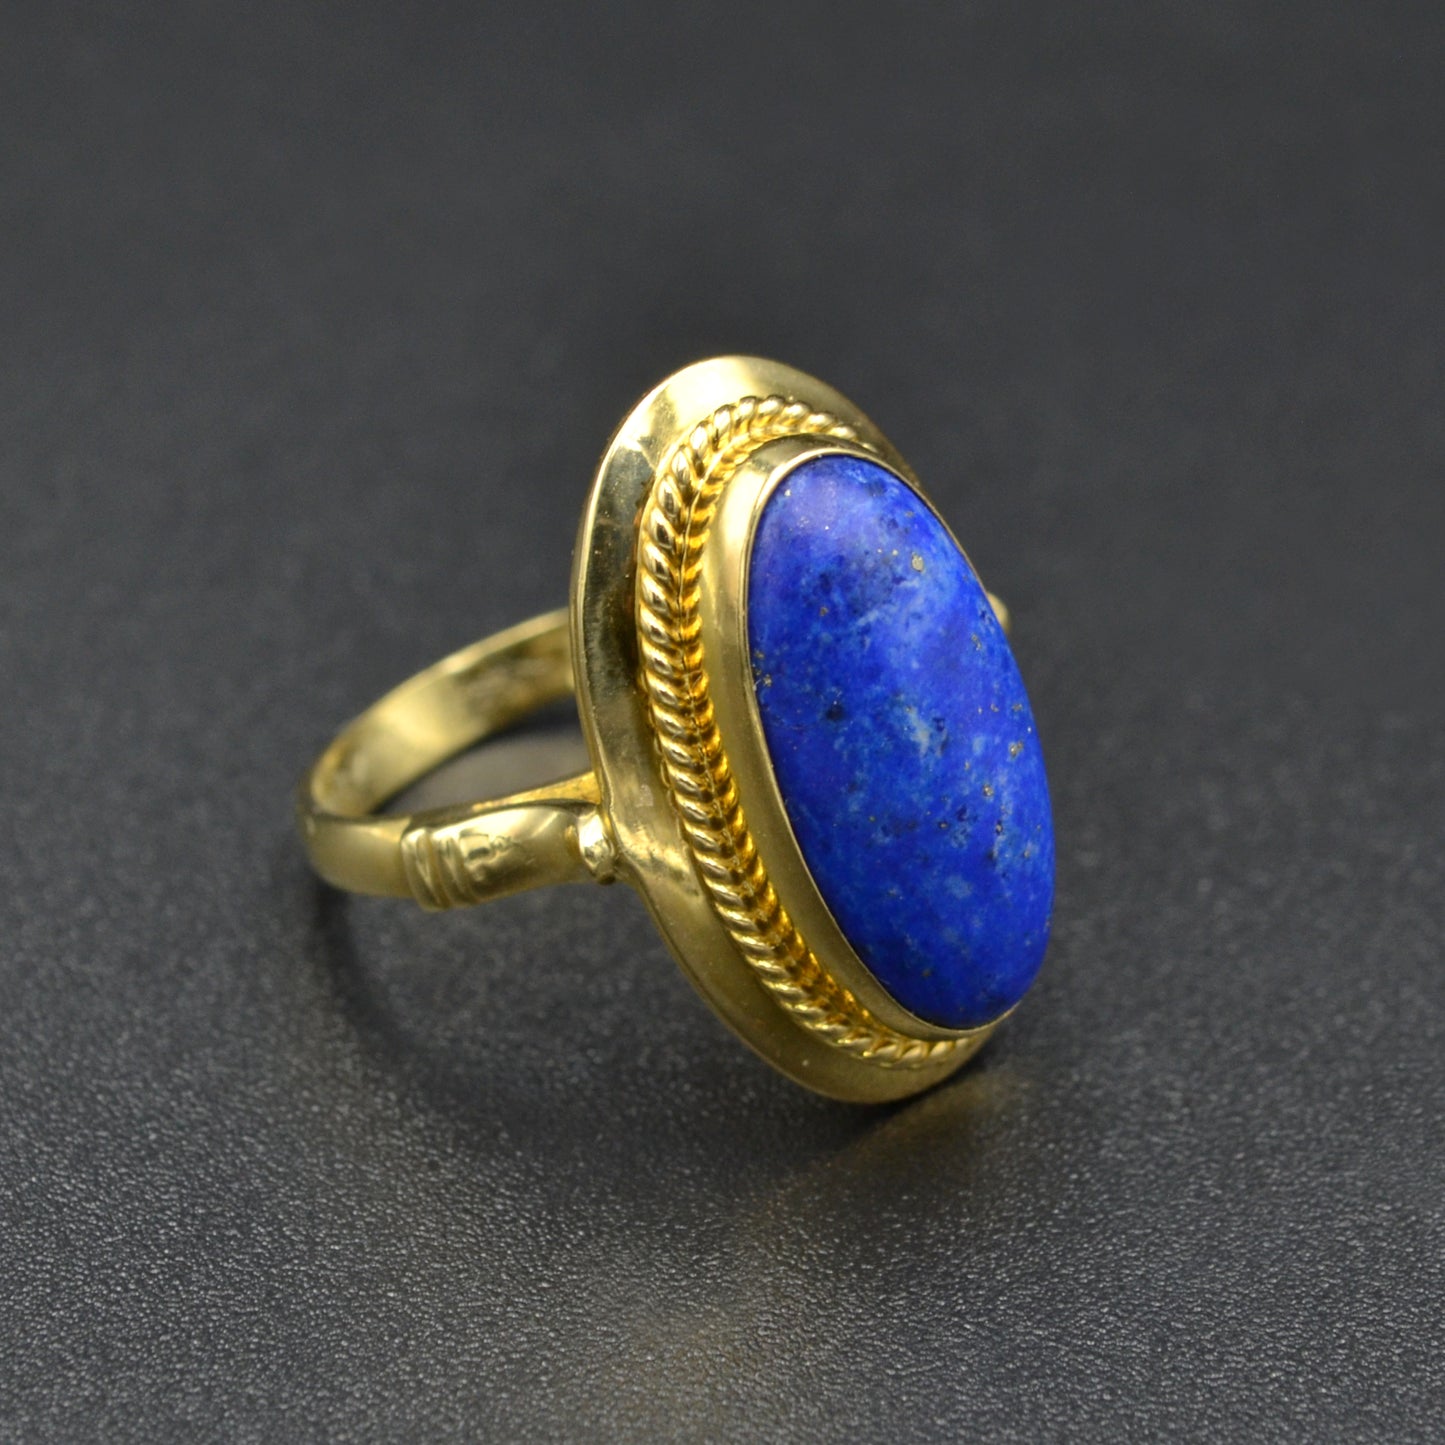 Vintage Lapis Lazuli Cabochon and 18k Gold Ring